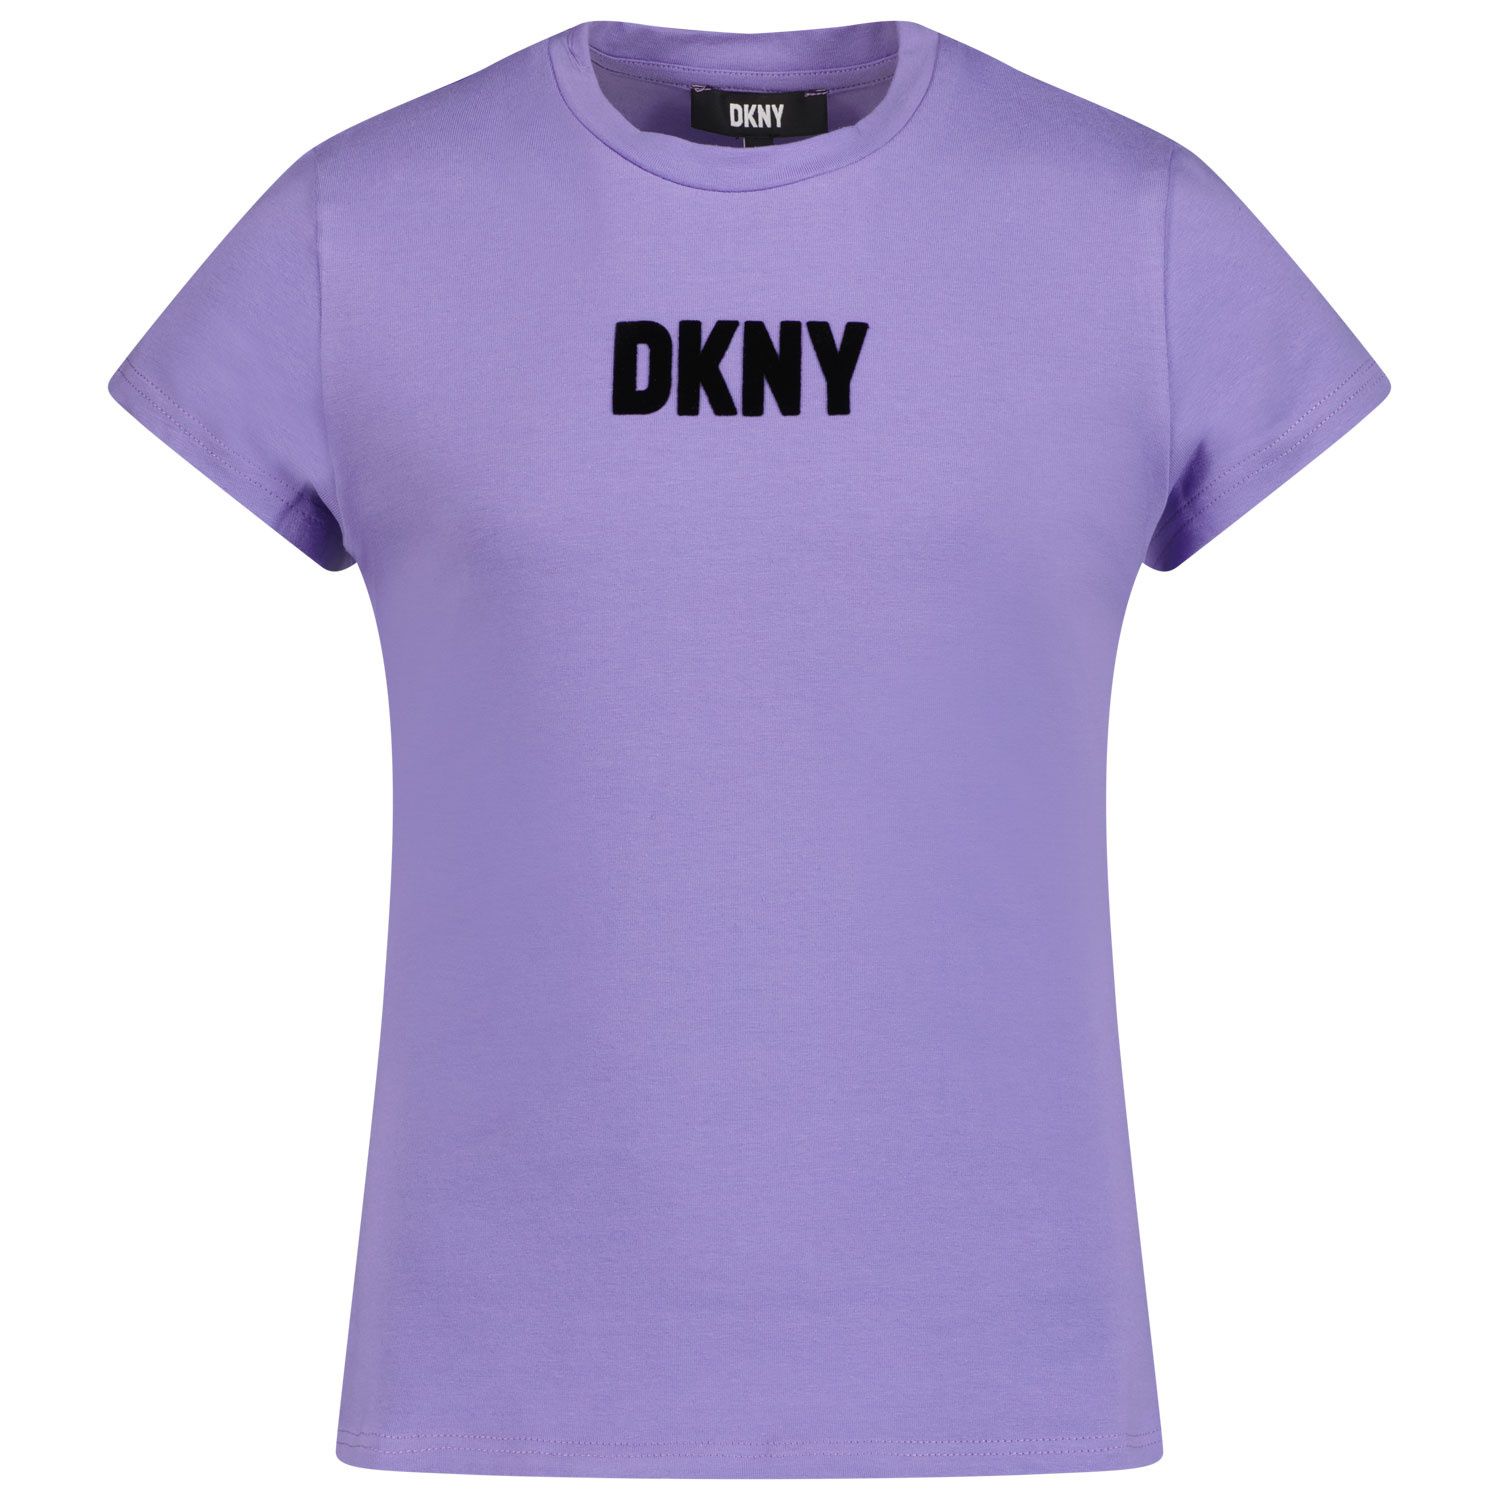 Bild von DKNY D35S29 Kindershirt Violett